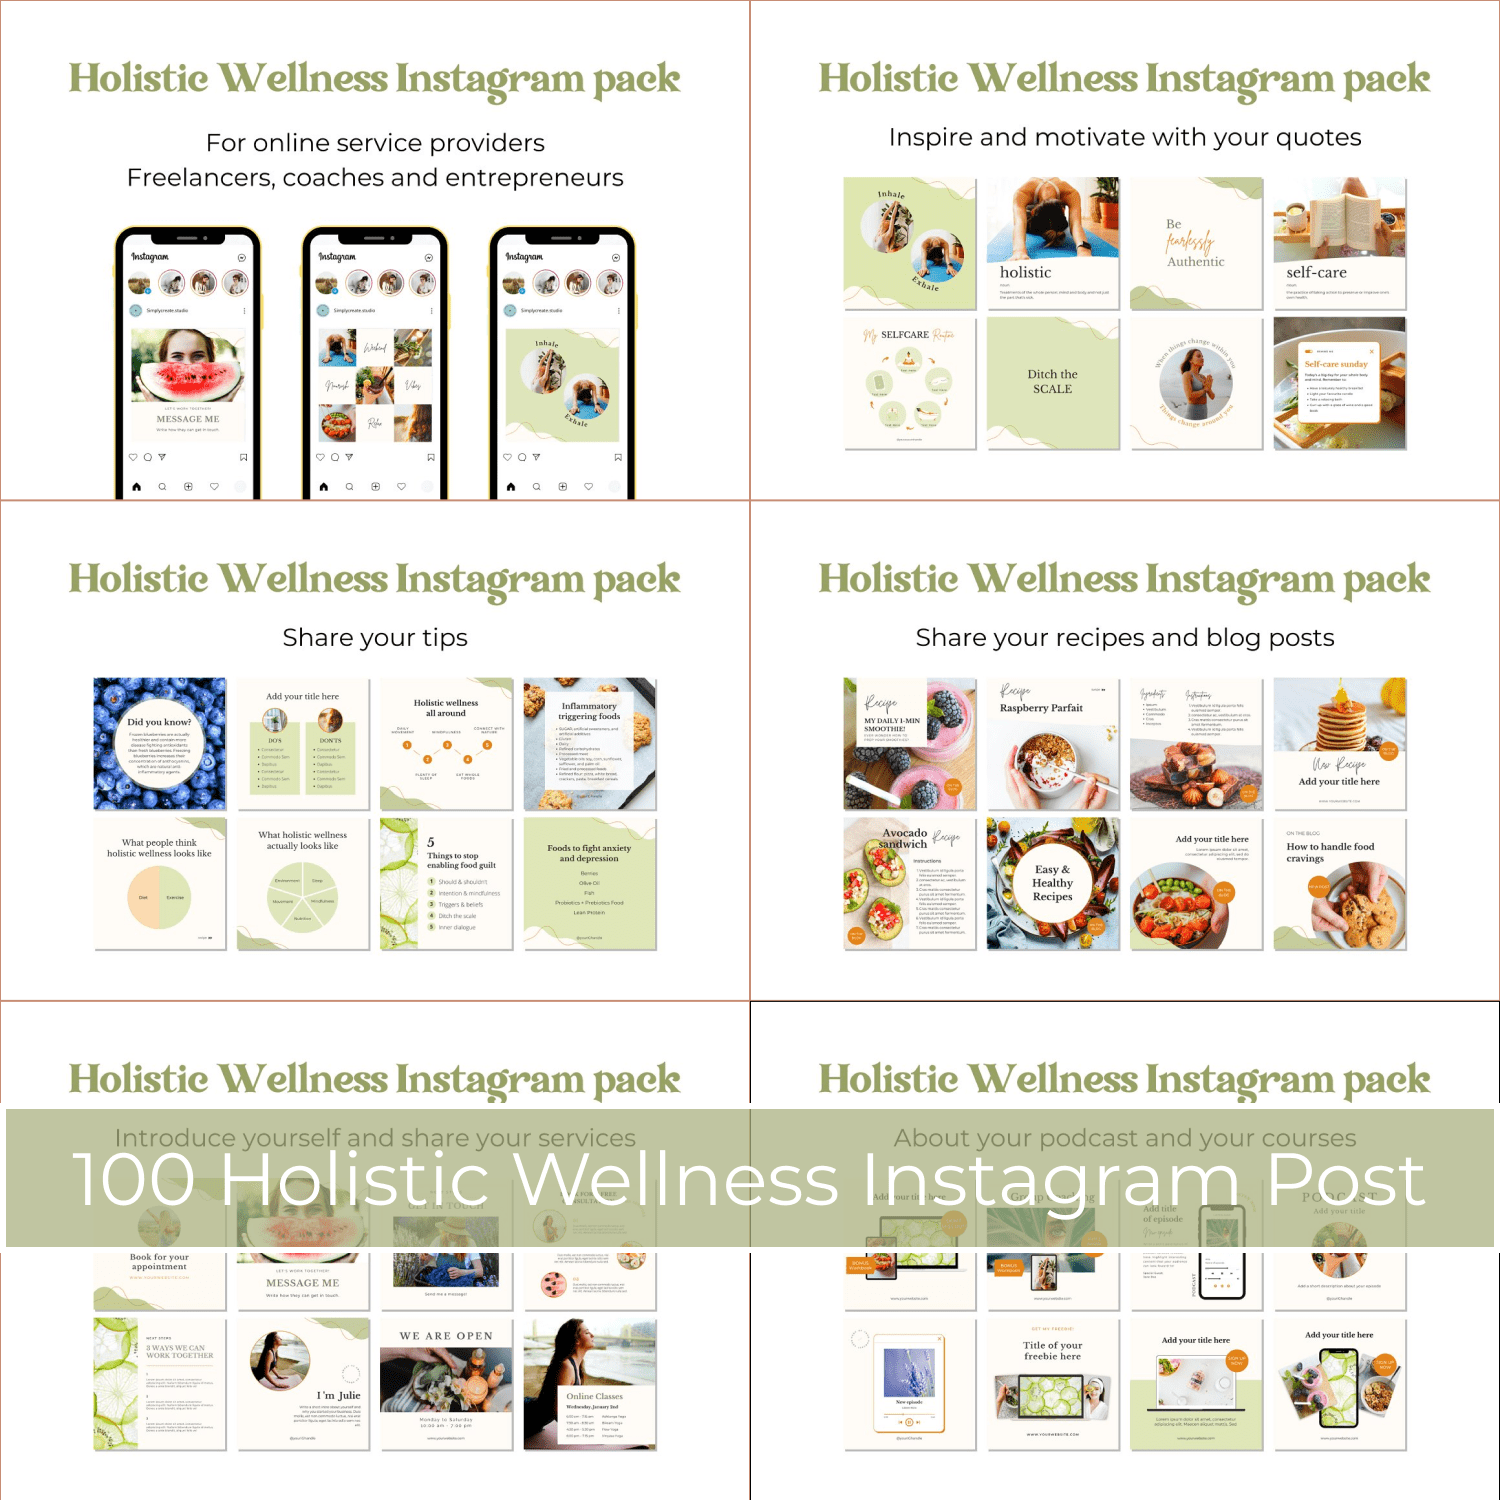 100 Holistic Wellness Instagram Post cover image.